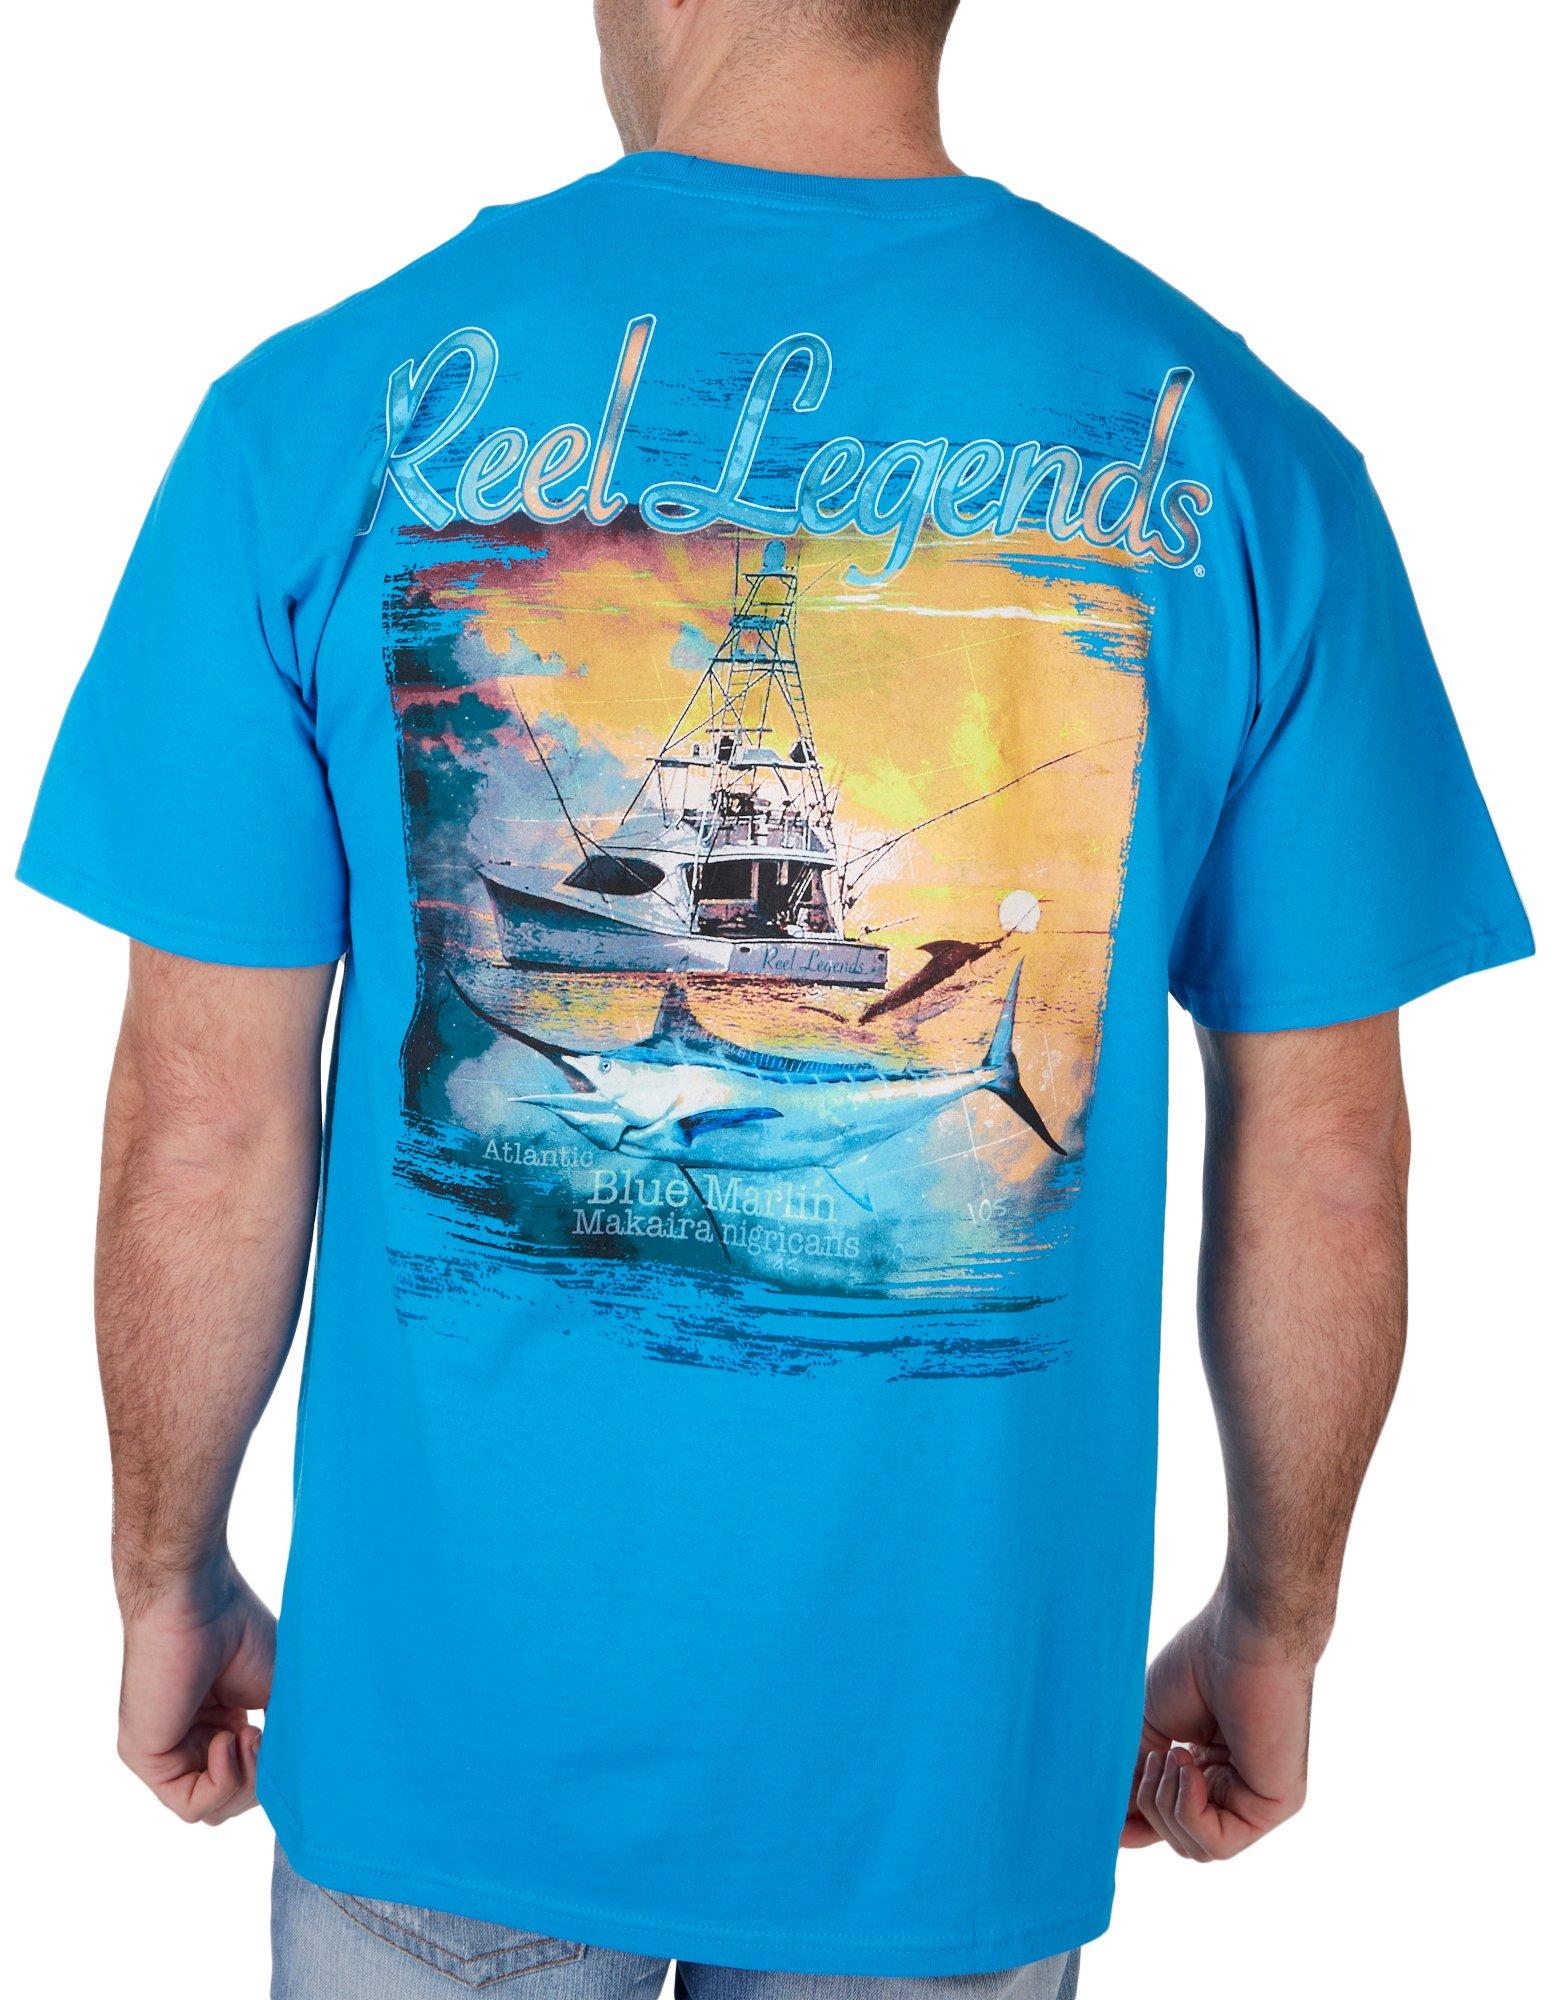 Reel Legends Mens 3 Fish Inshore Slam Short Sleeve T-Shirt